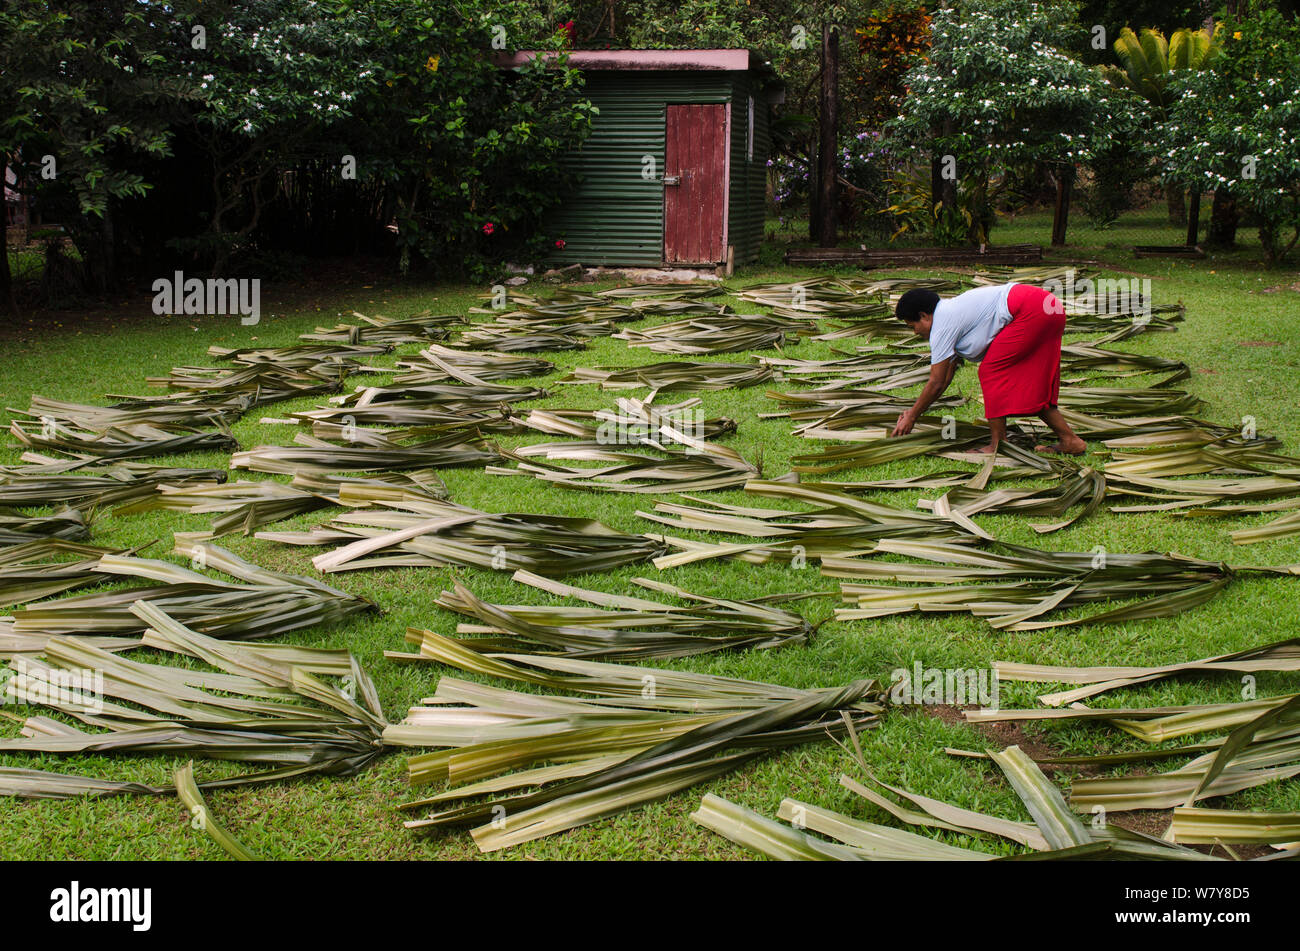 Frau trocknen Pandanus Palmblättern (Pandanus sp) Matten zu machen. Bouma National Park, Fidschi, Südpazifik, Juli 2014. Stockfoto